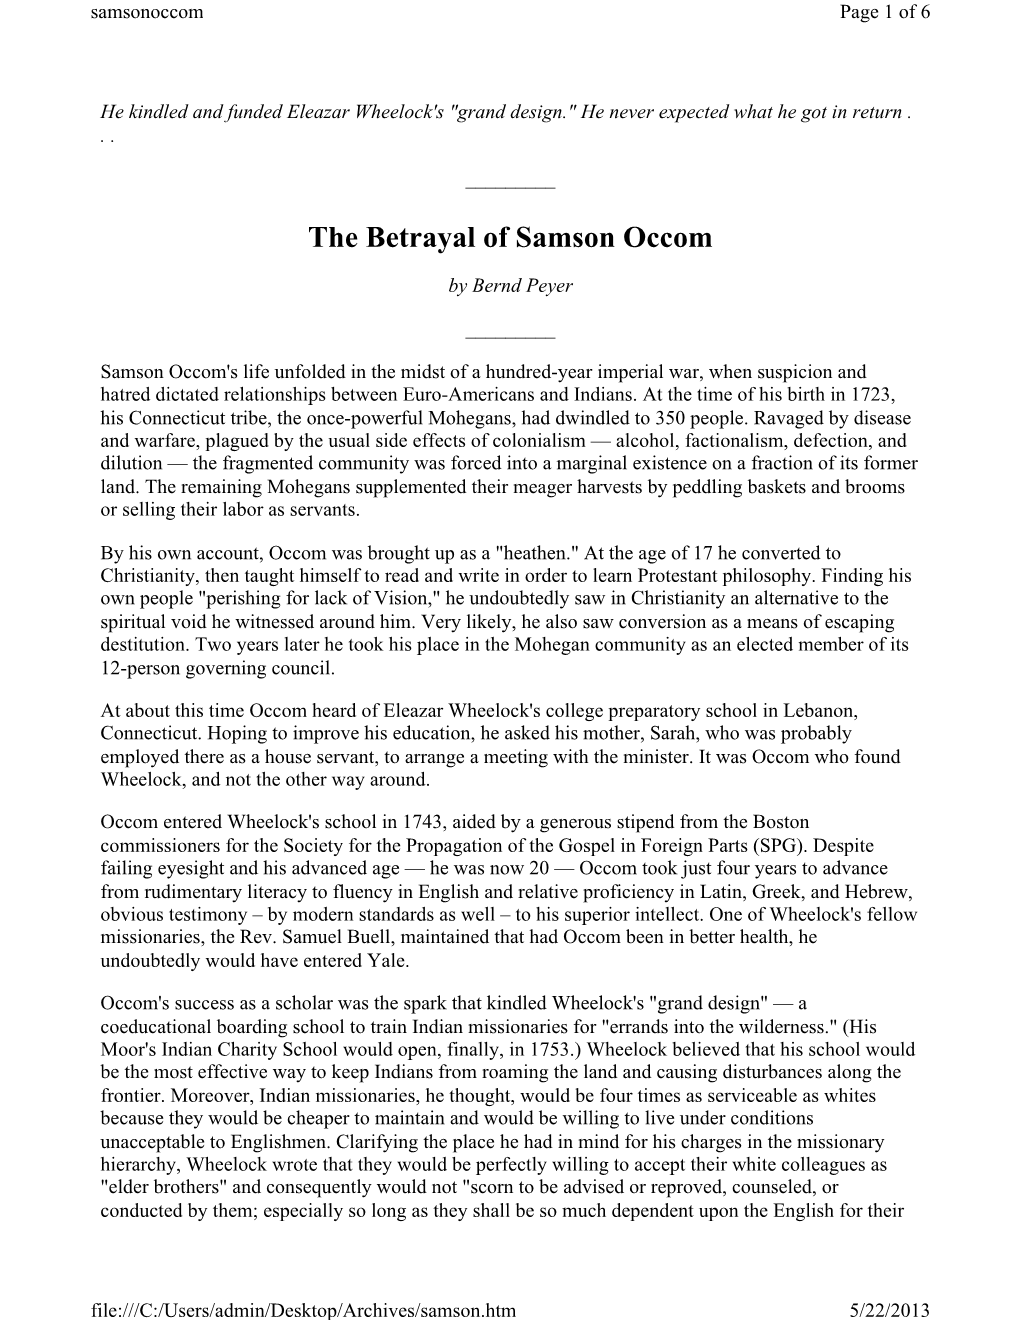 The Betrayal of Samson Occom